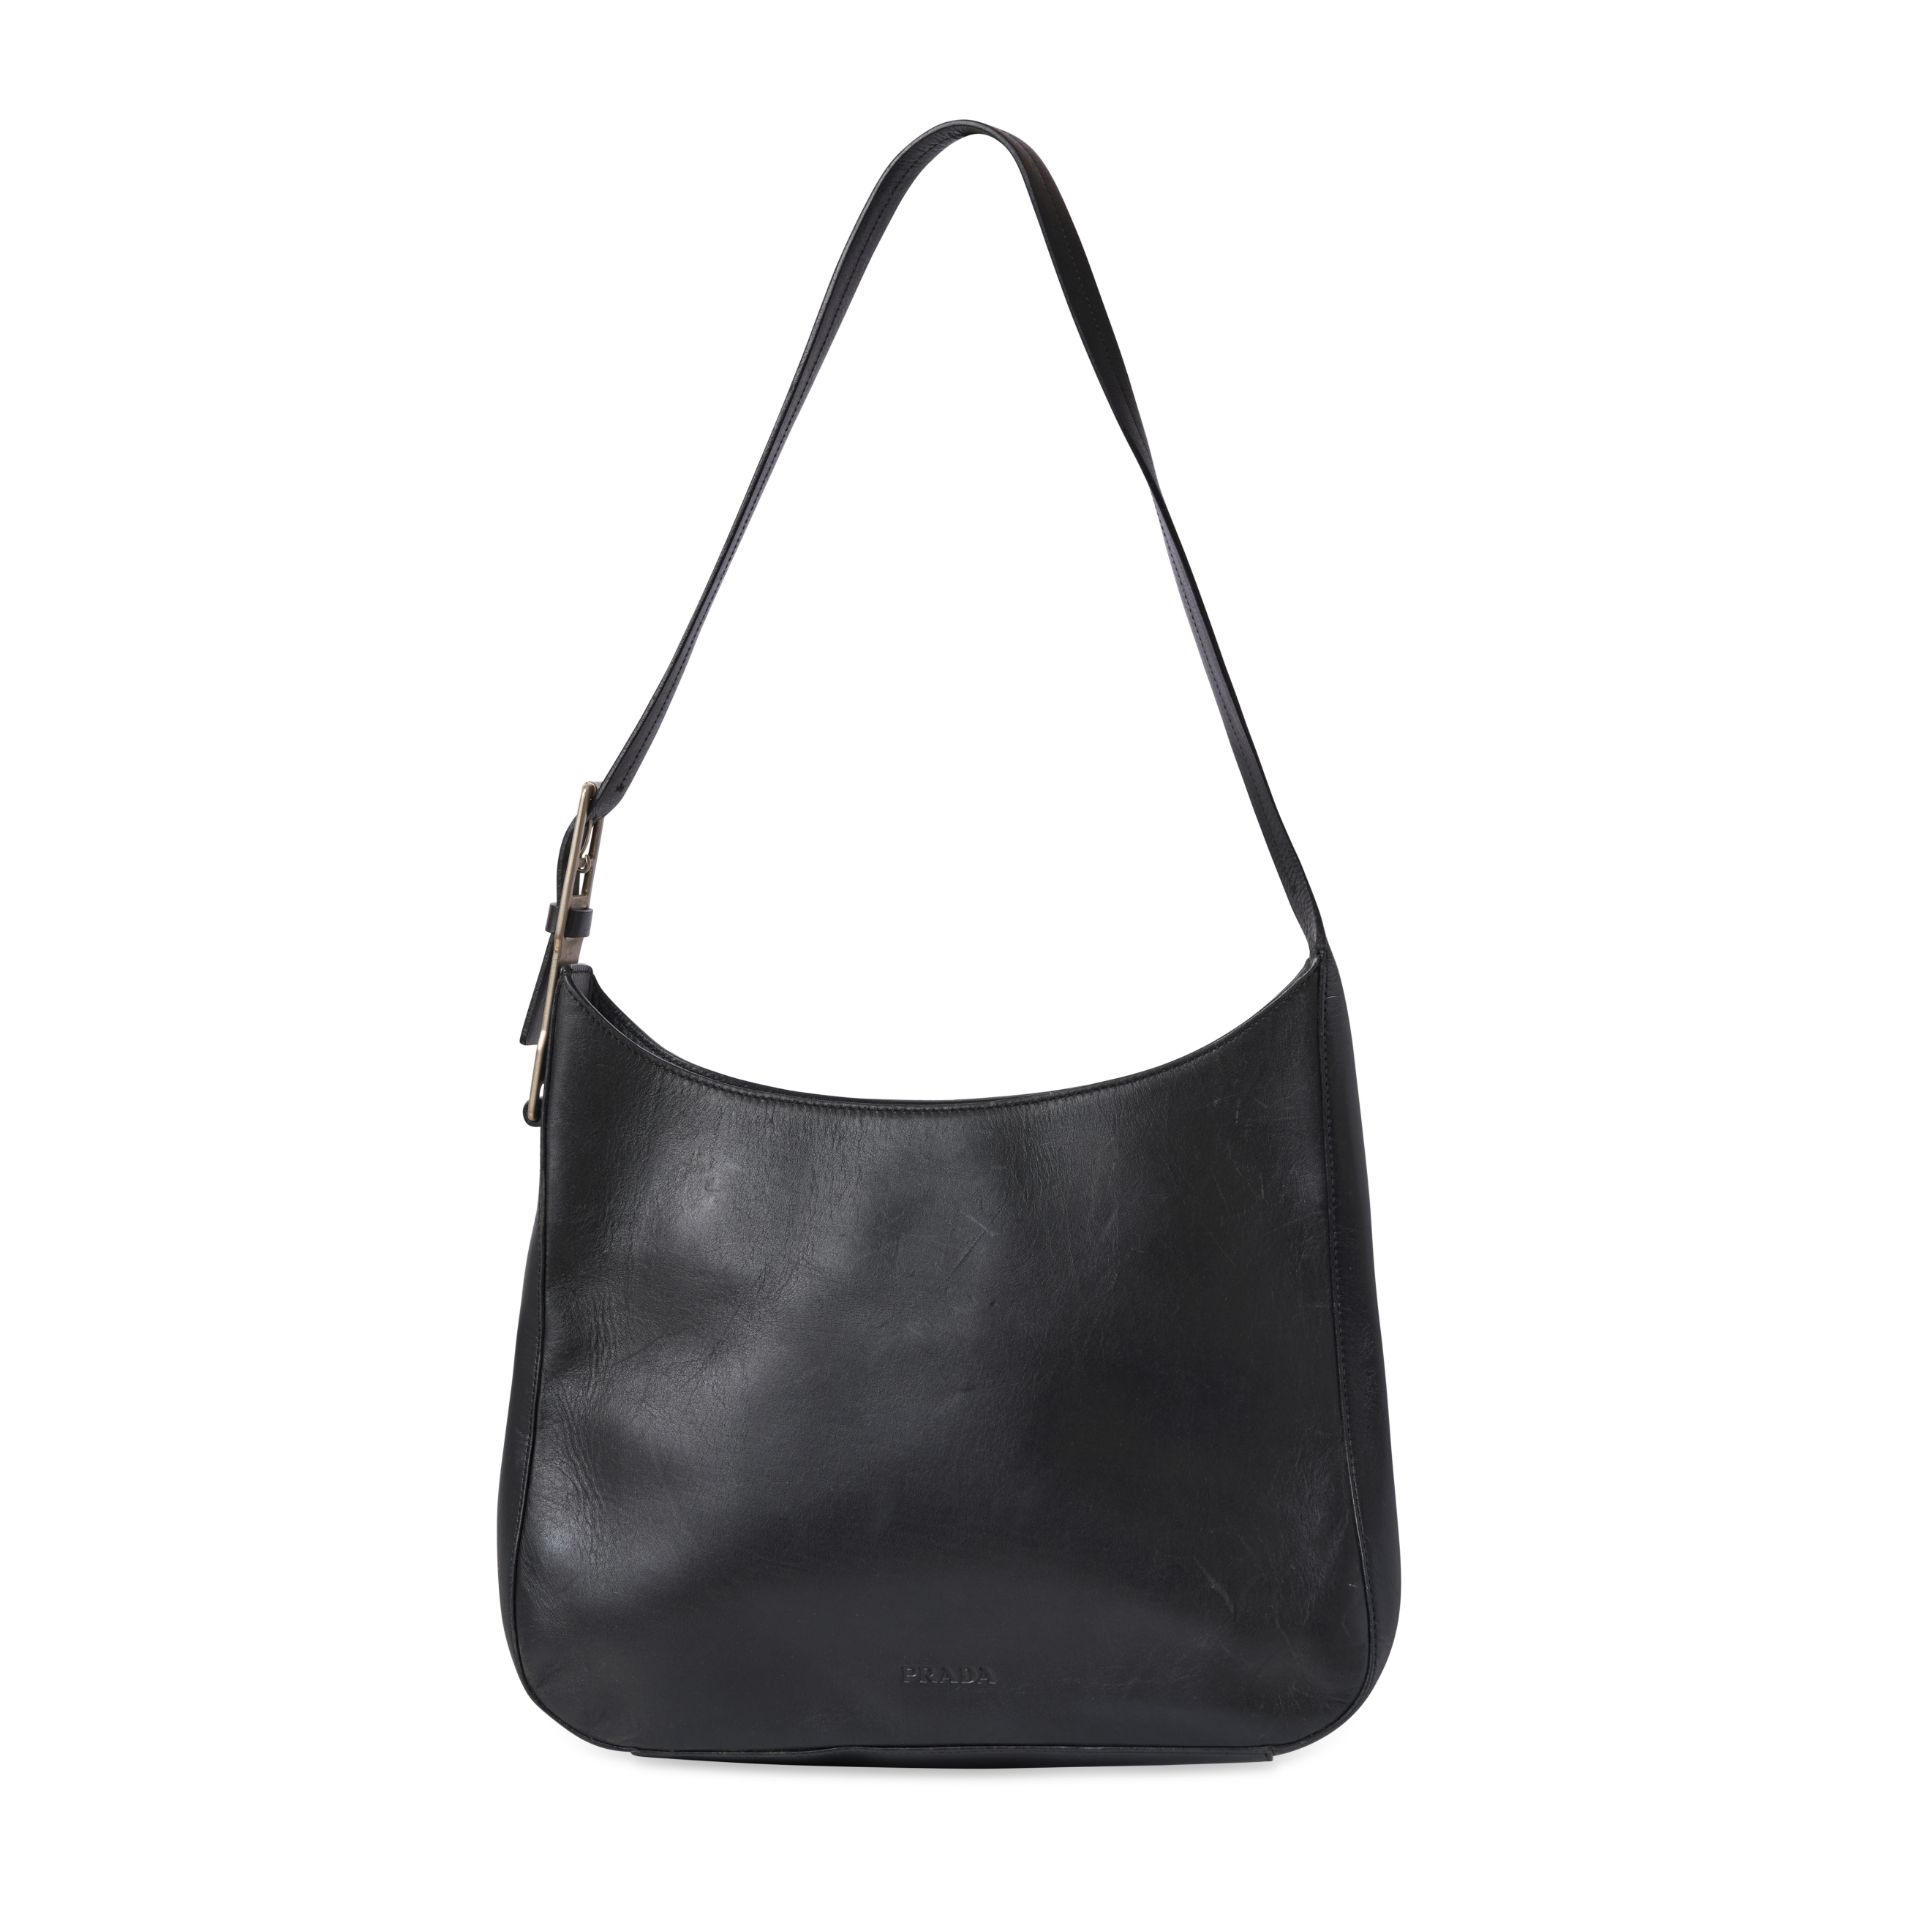 PRADA BLACK BUCKLE SHOULDER BAG Condition grade C-. 30cm long, 26cm high. 34cm strap drop. Blac...